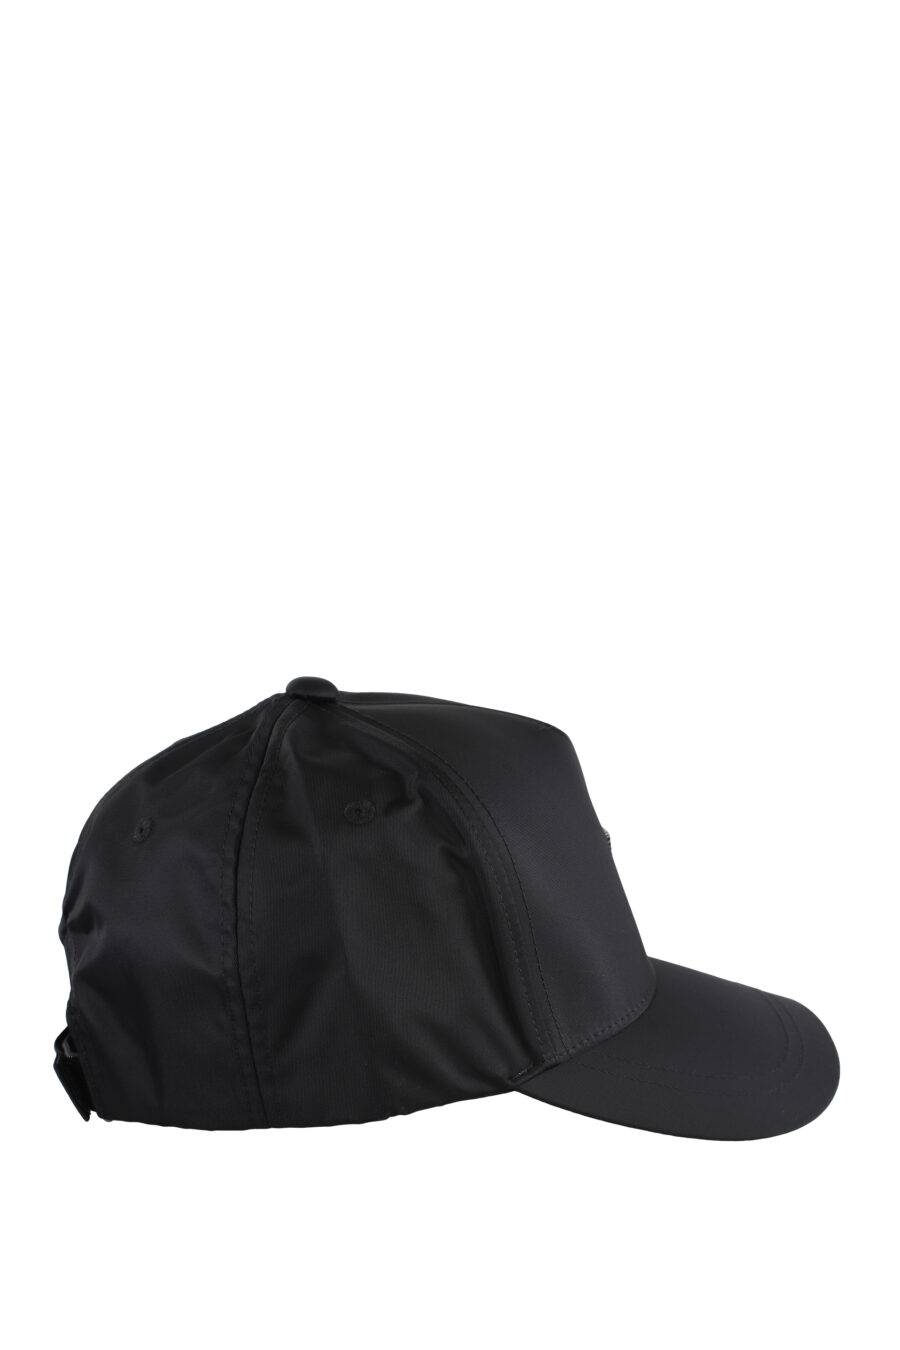 Schwarze Kappe mit Metalladler-Logo - IMG 5177